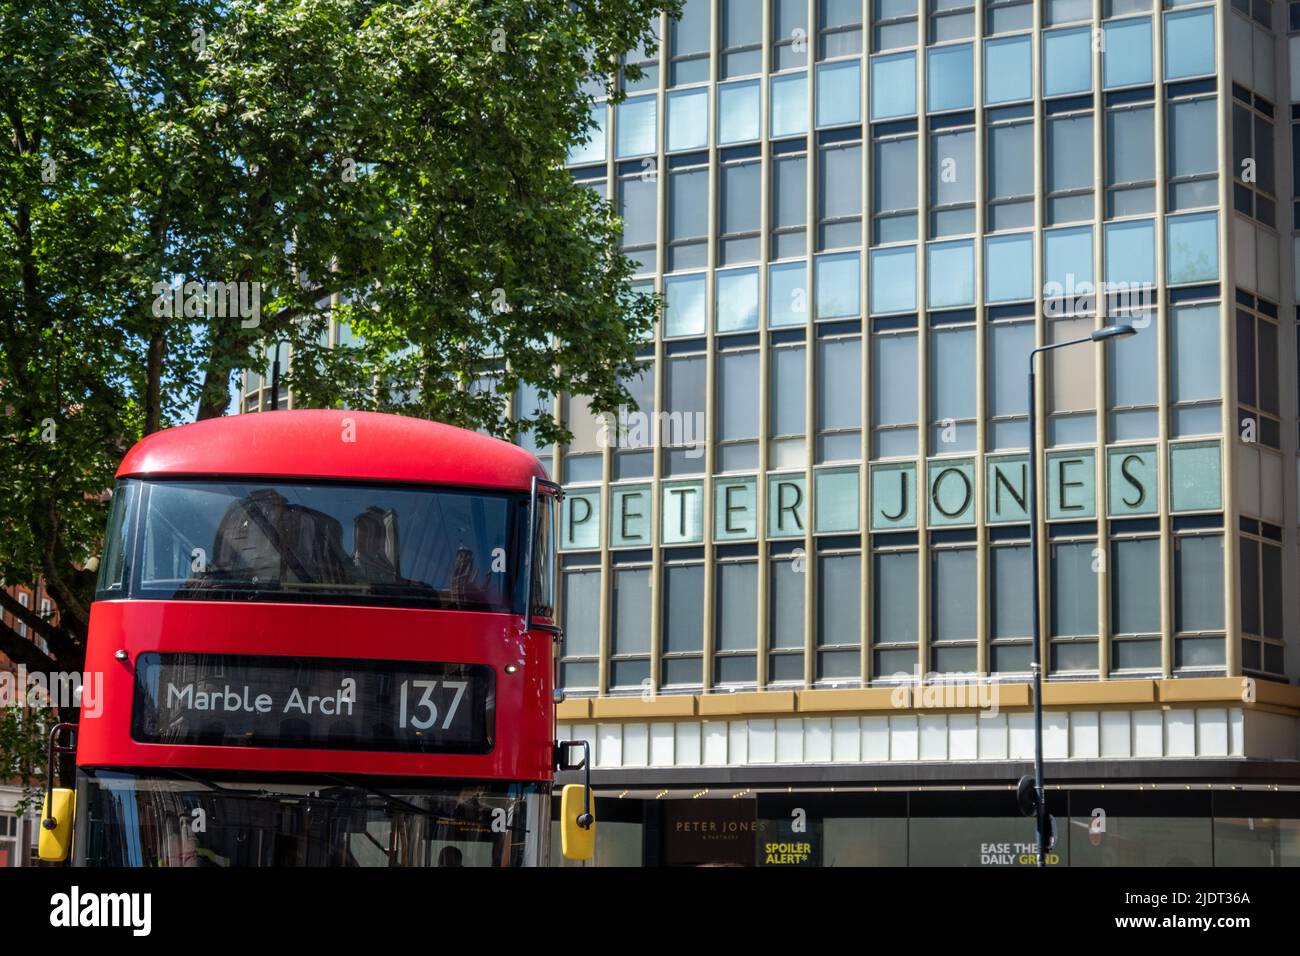 London Mai 2022: Peter Jones Kaufhaus am Sloane Square, Chelsea, London. Stockfoto